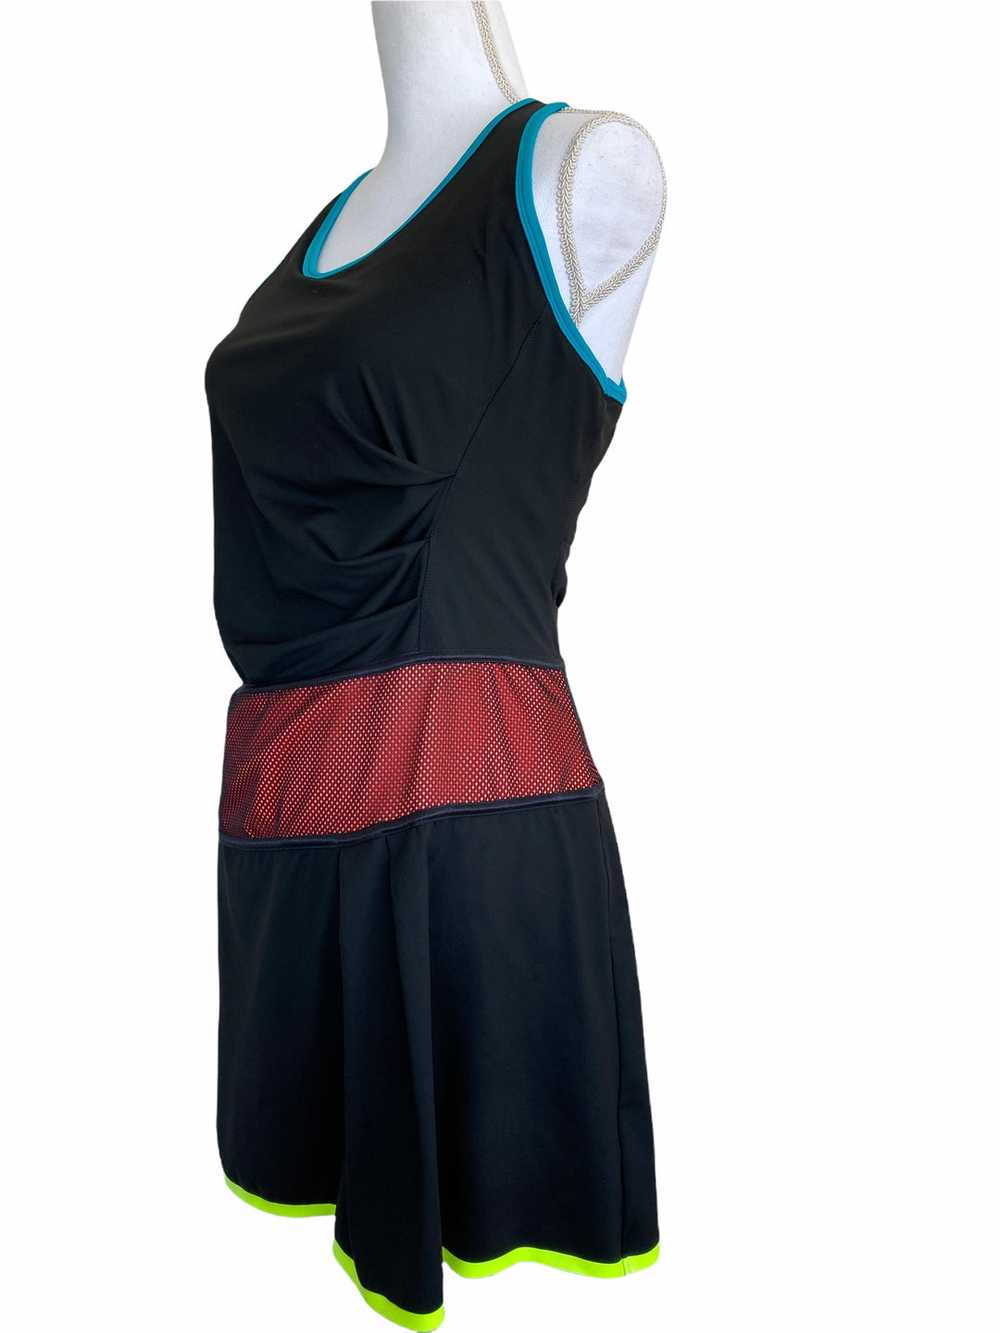 Monreal Tennis Dress L - image 2